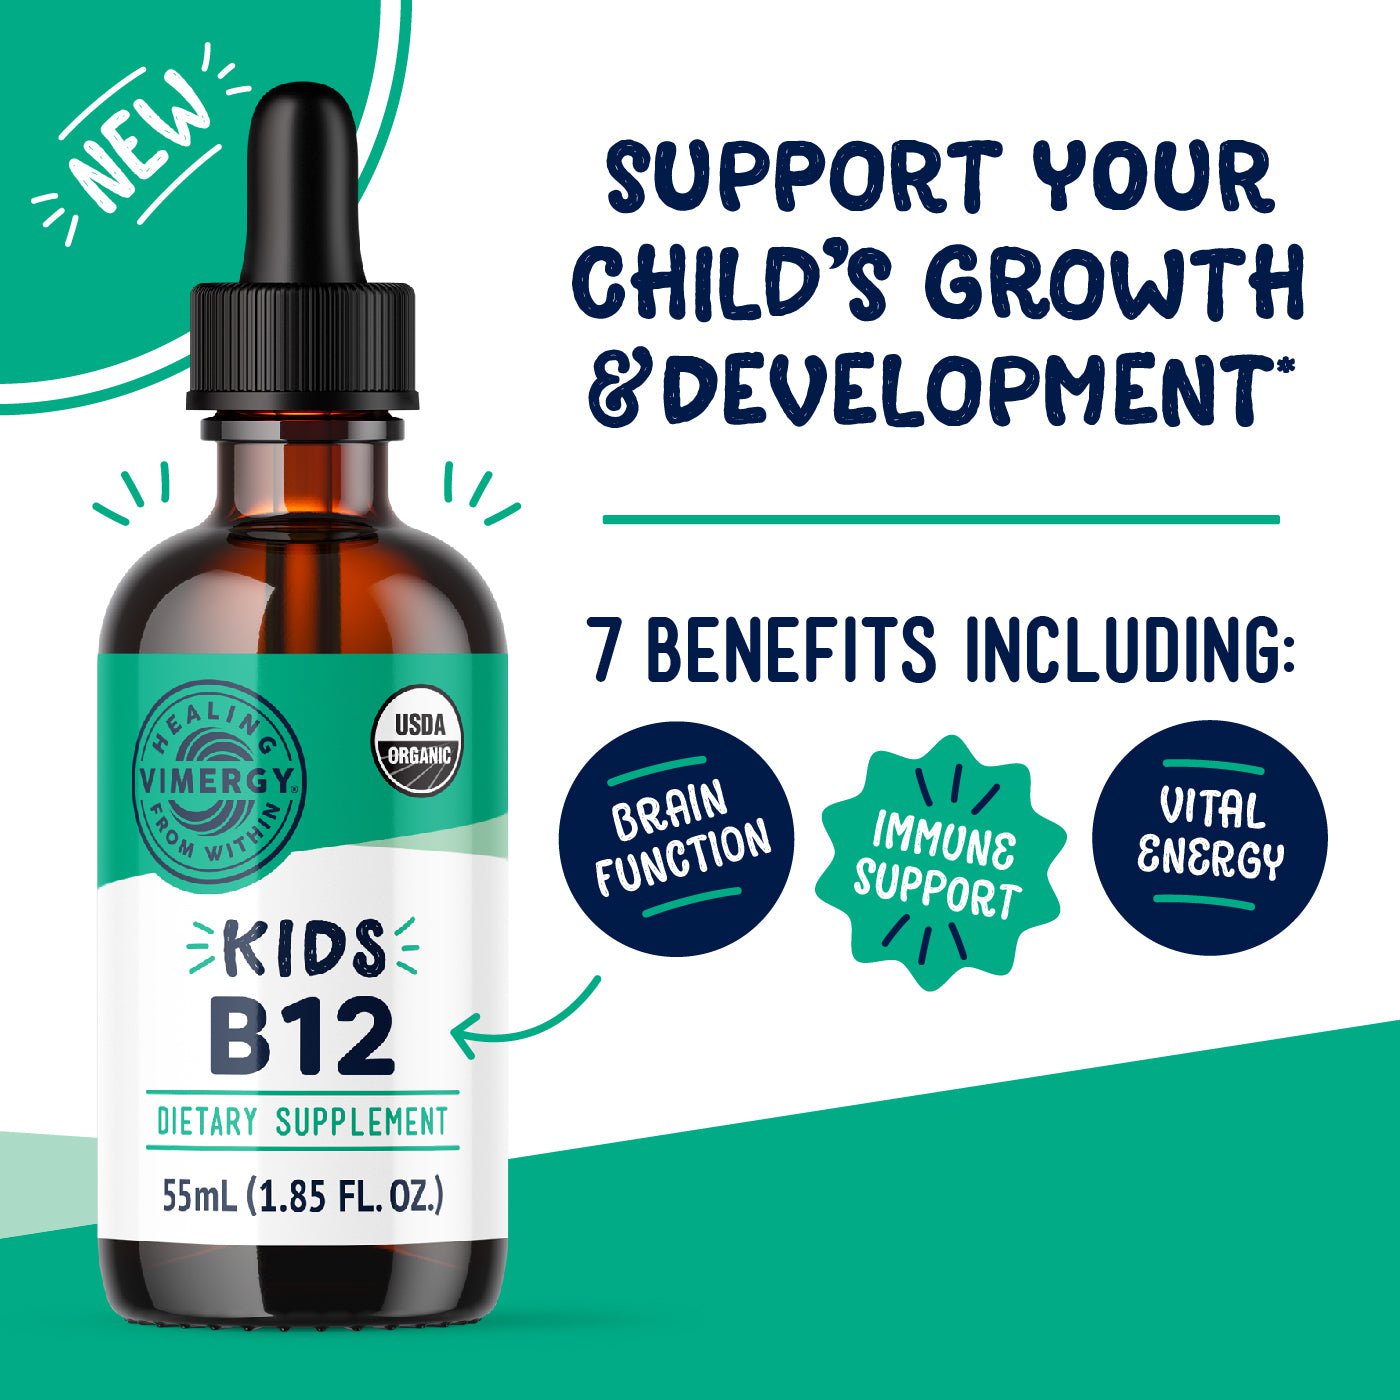 Kids Organic B-12 Vimergy Supplements Vitamins